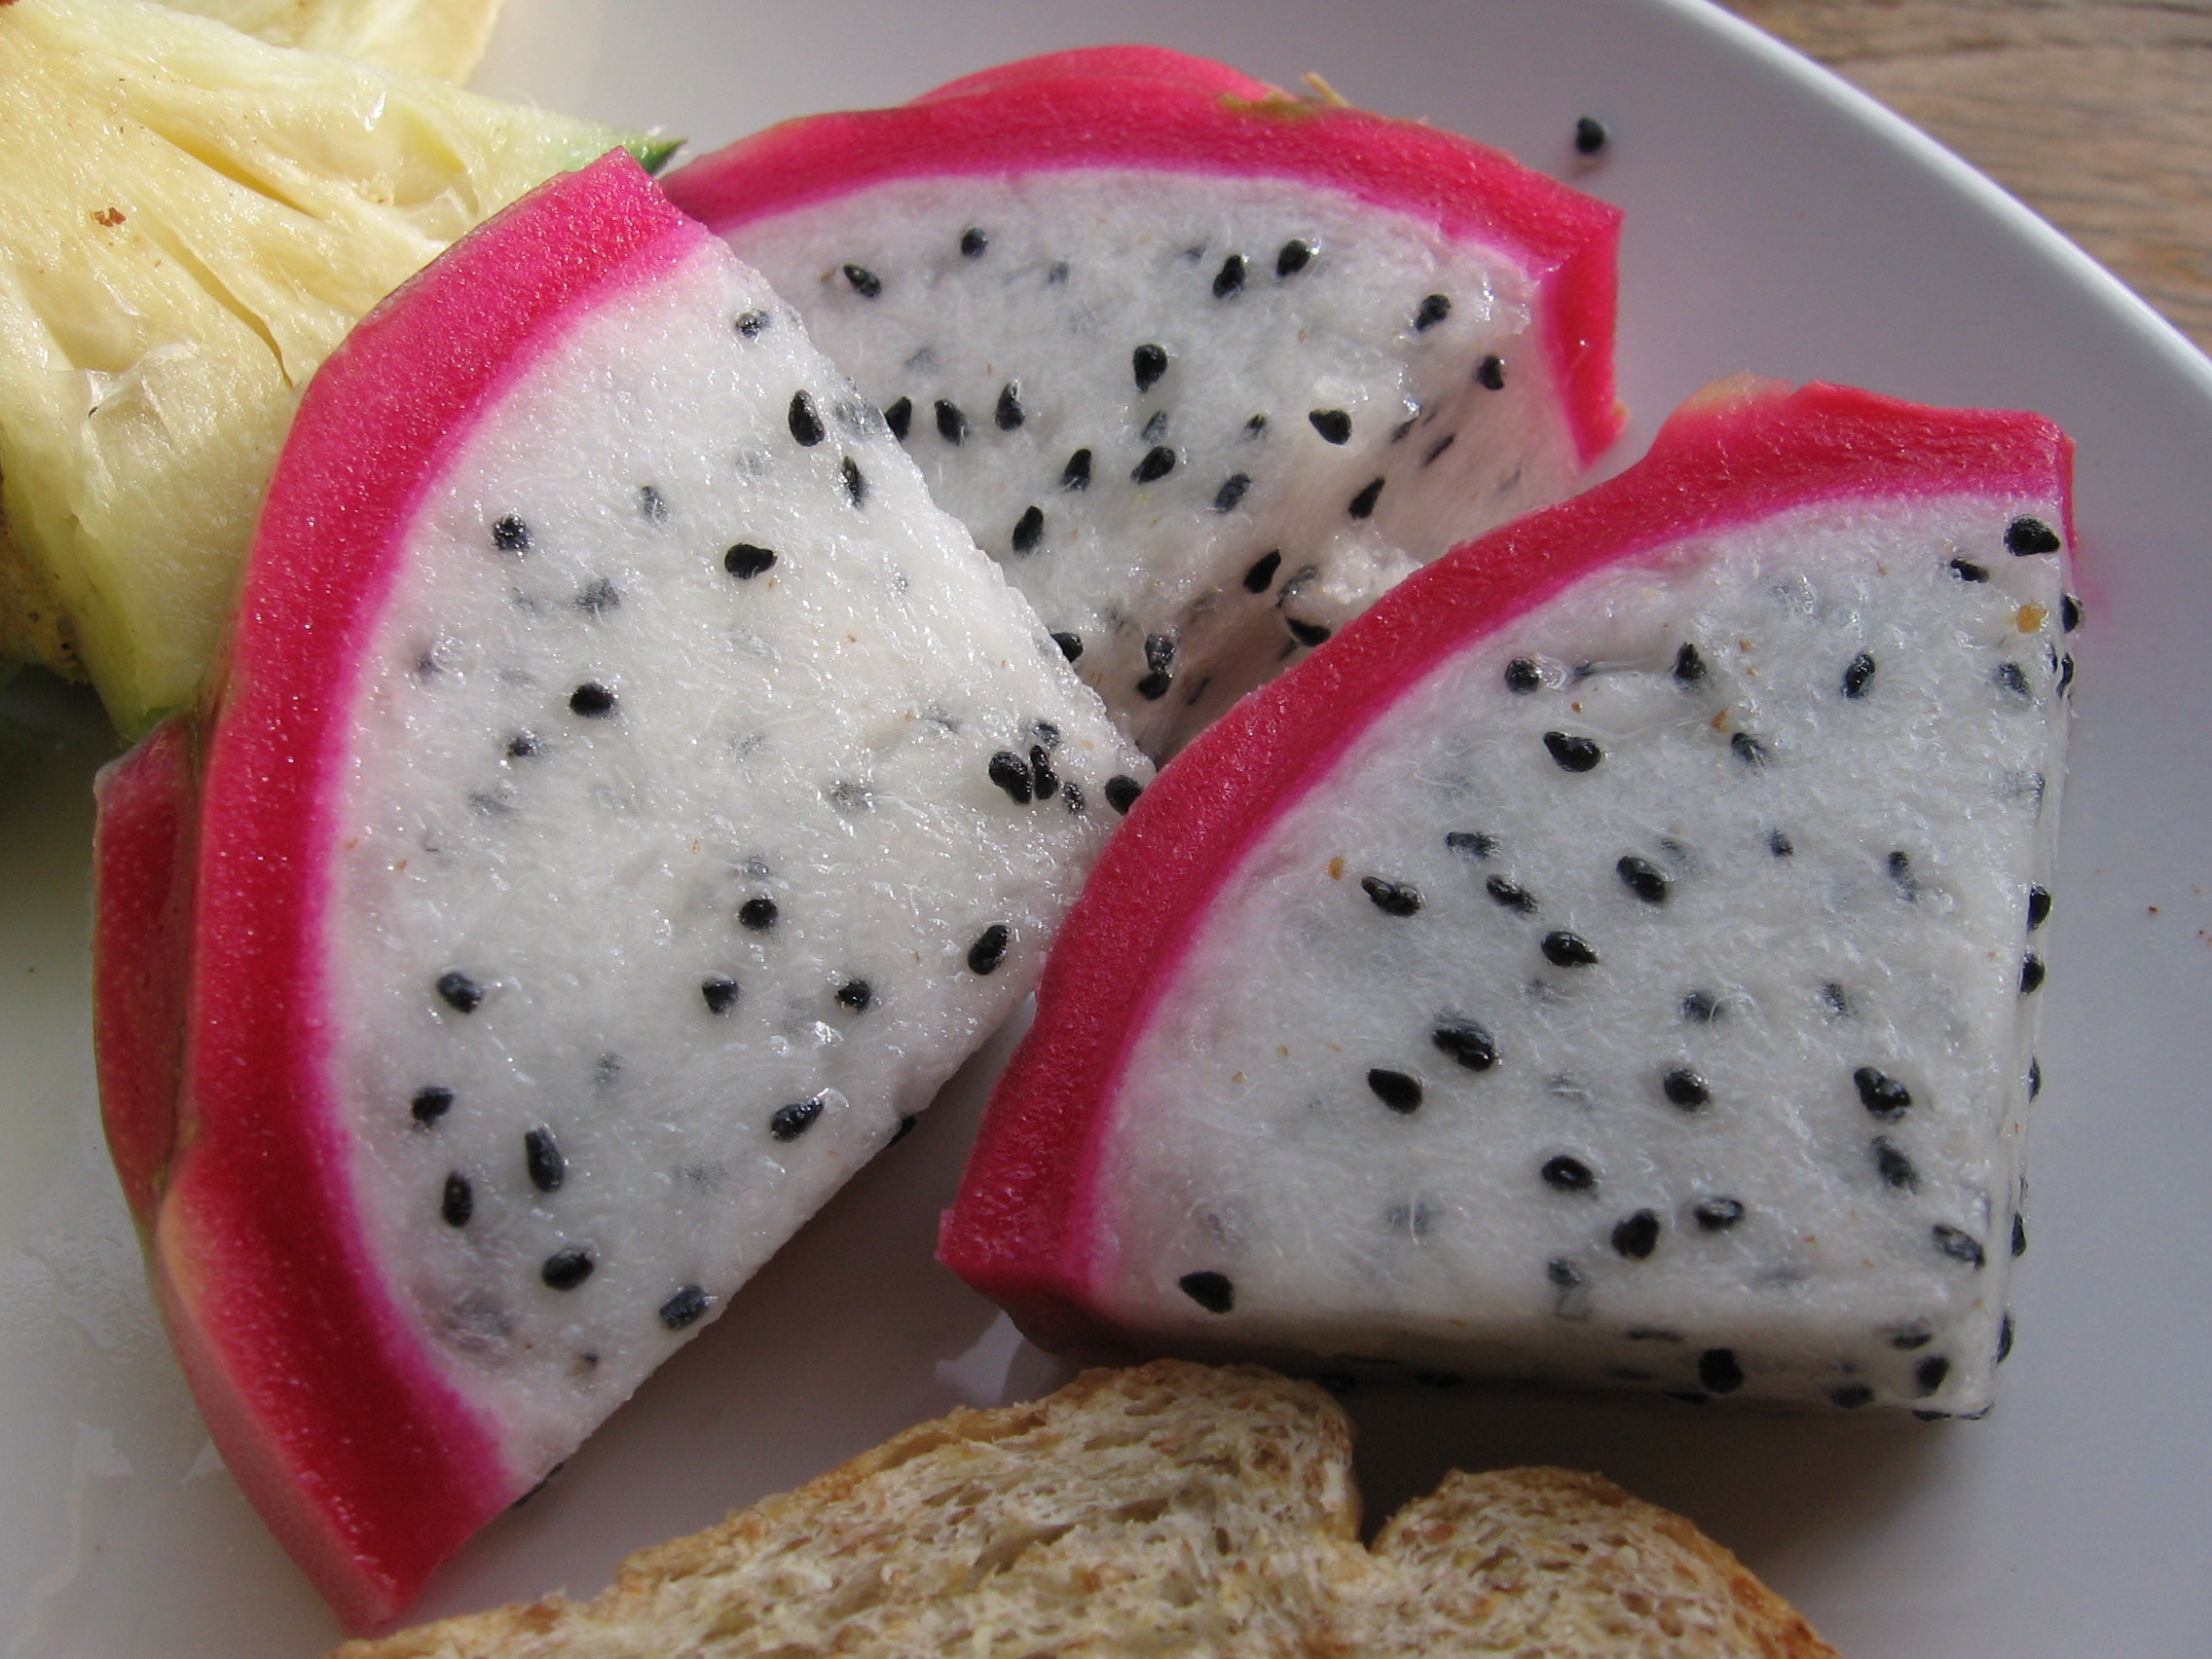 File:Slices of Dragon fruit.JPG - Wikimedia Commons